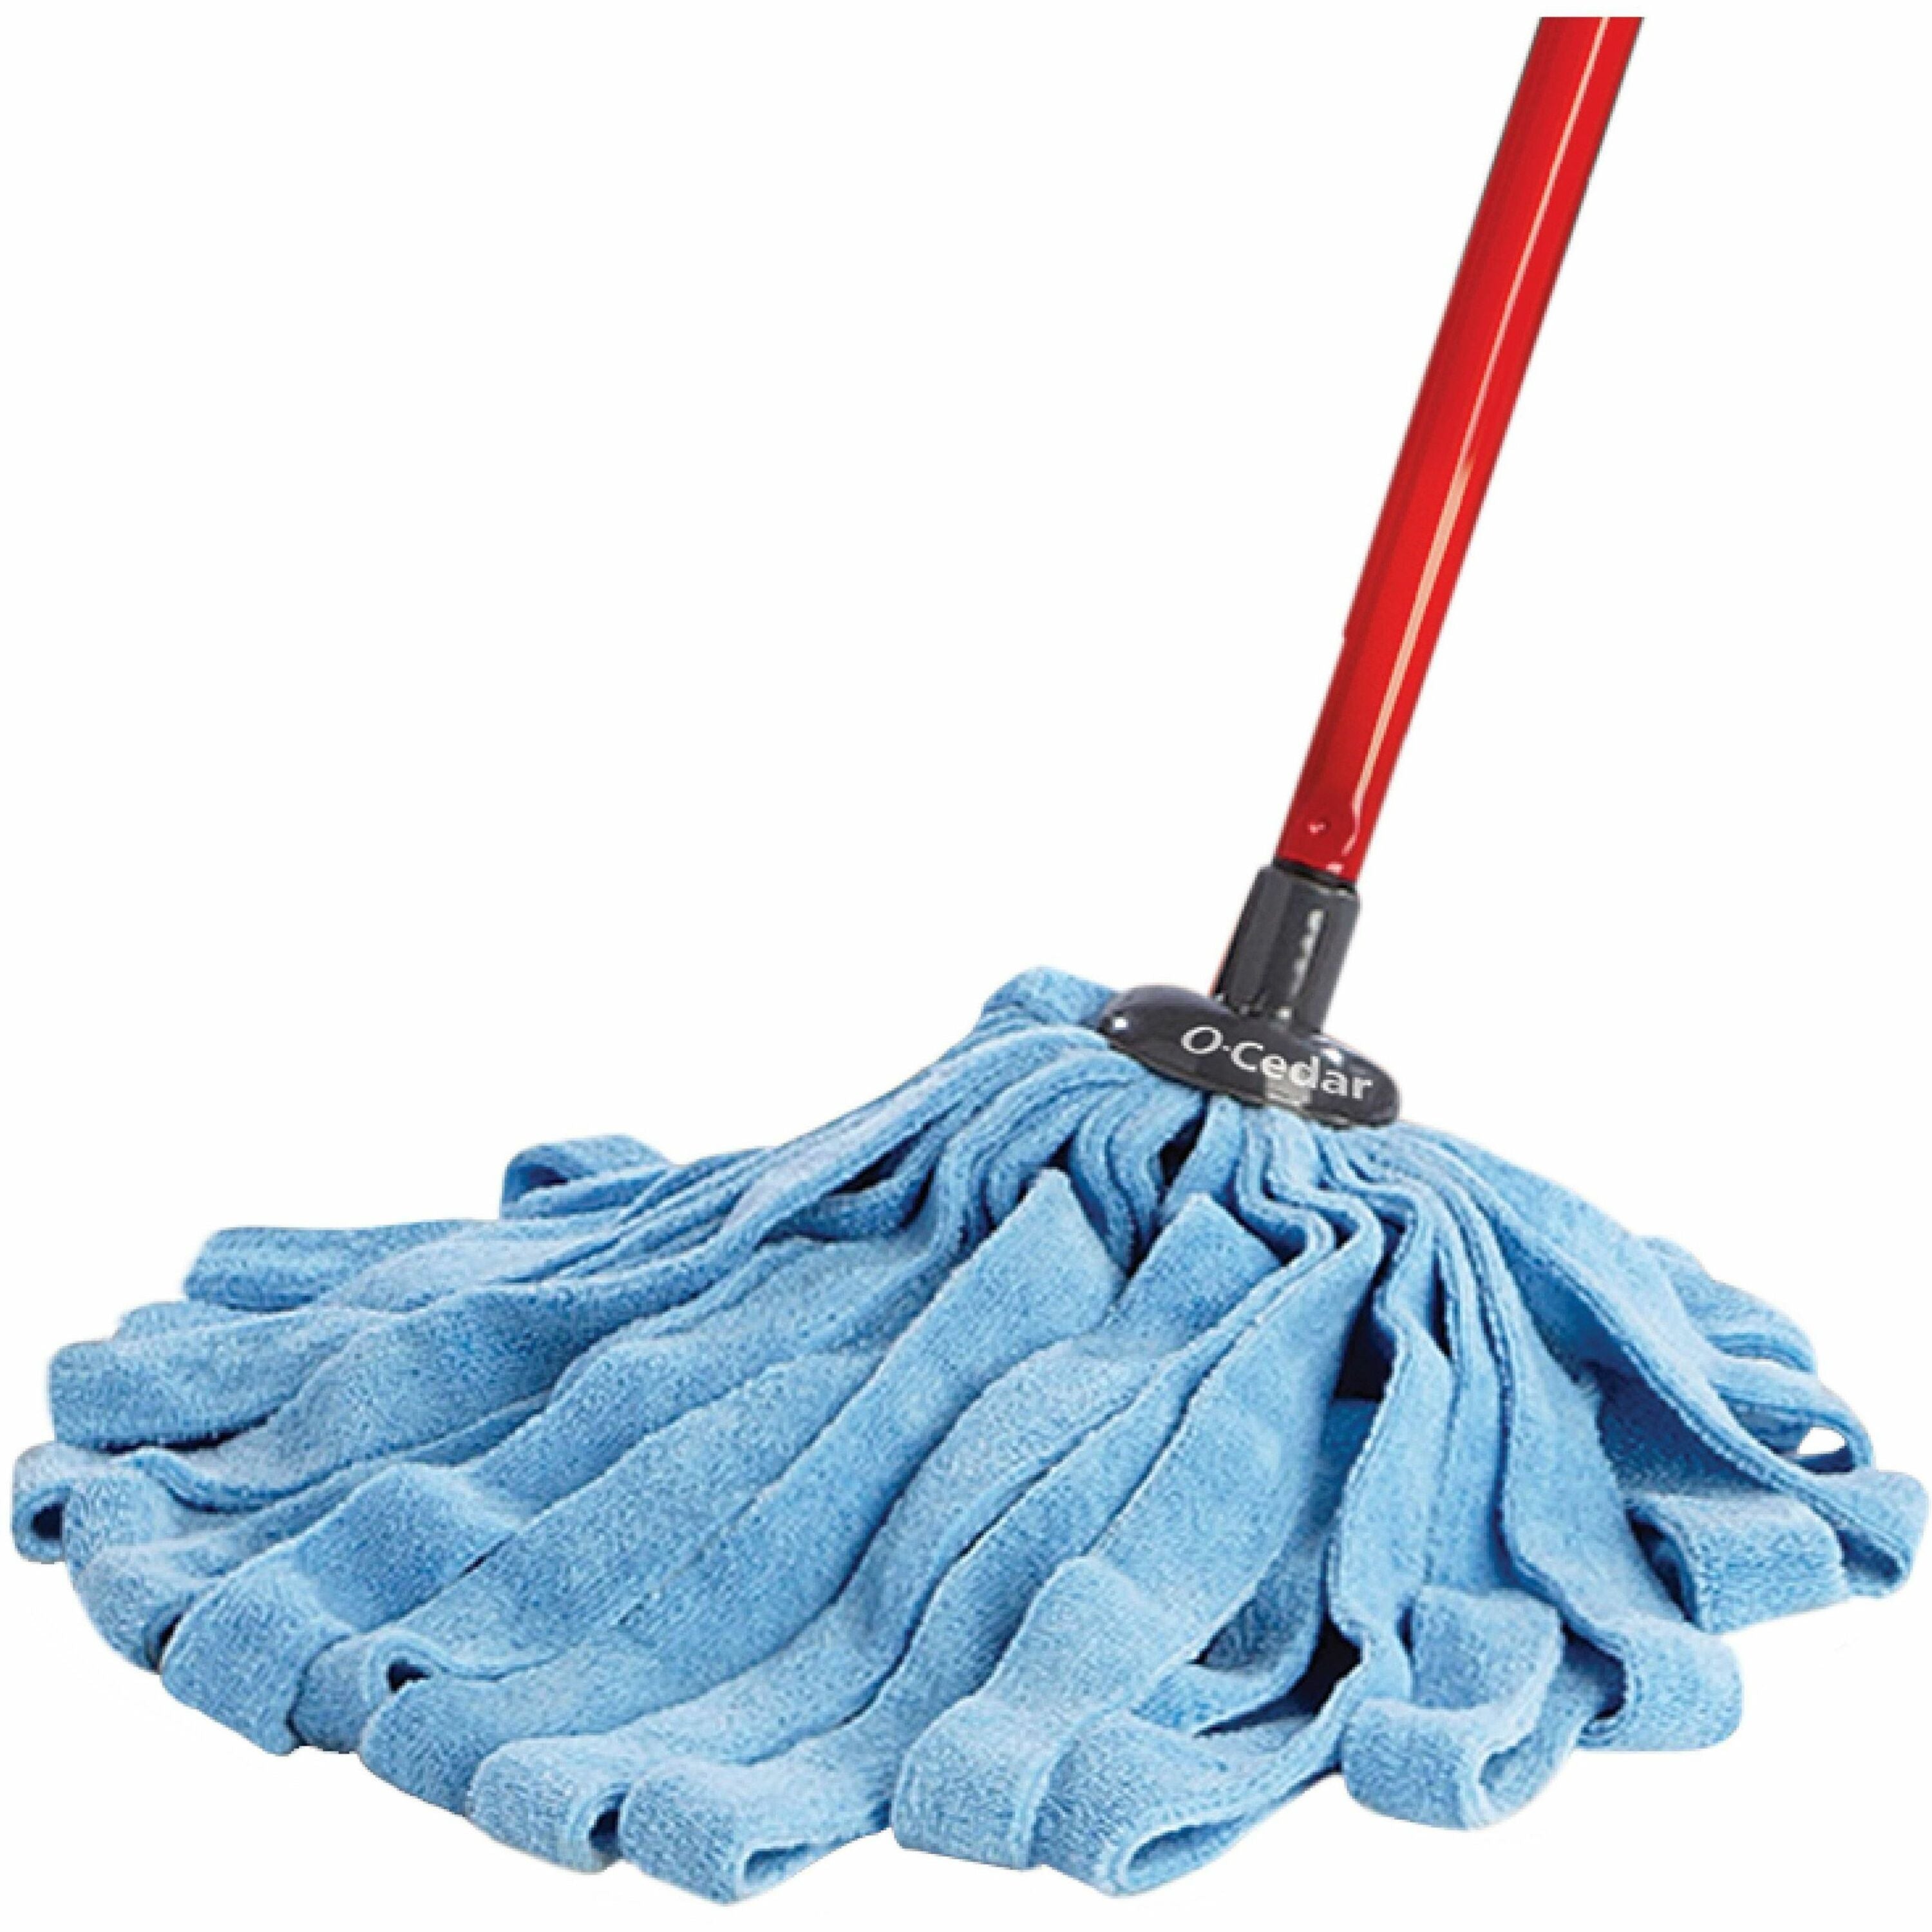 o-cedar-microfiber-cloth-mop-microfiber-head-absorbent-soft-machine-washable-reusable-refillable-1-each-multi_fhp133582 - 1